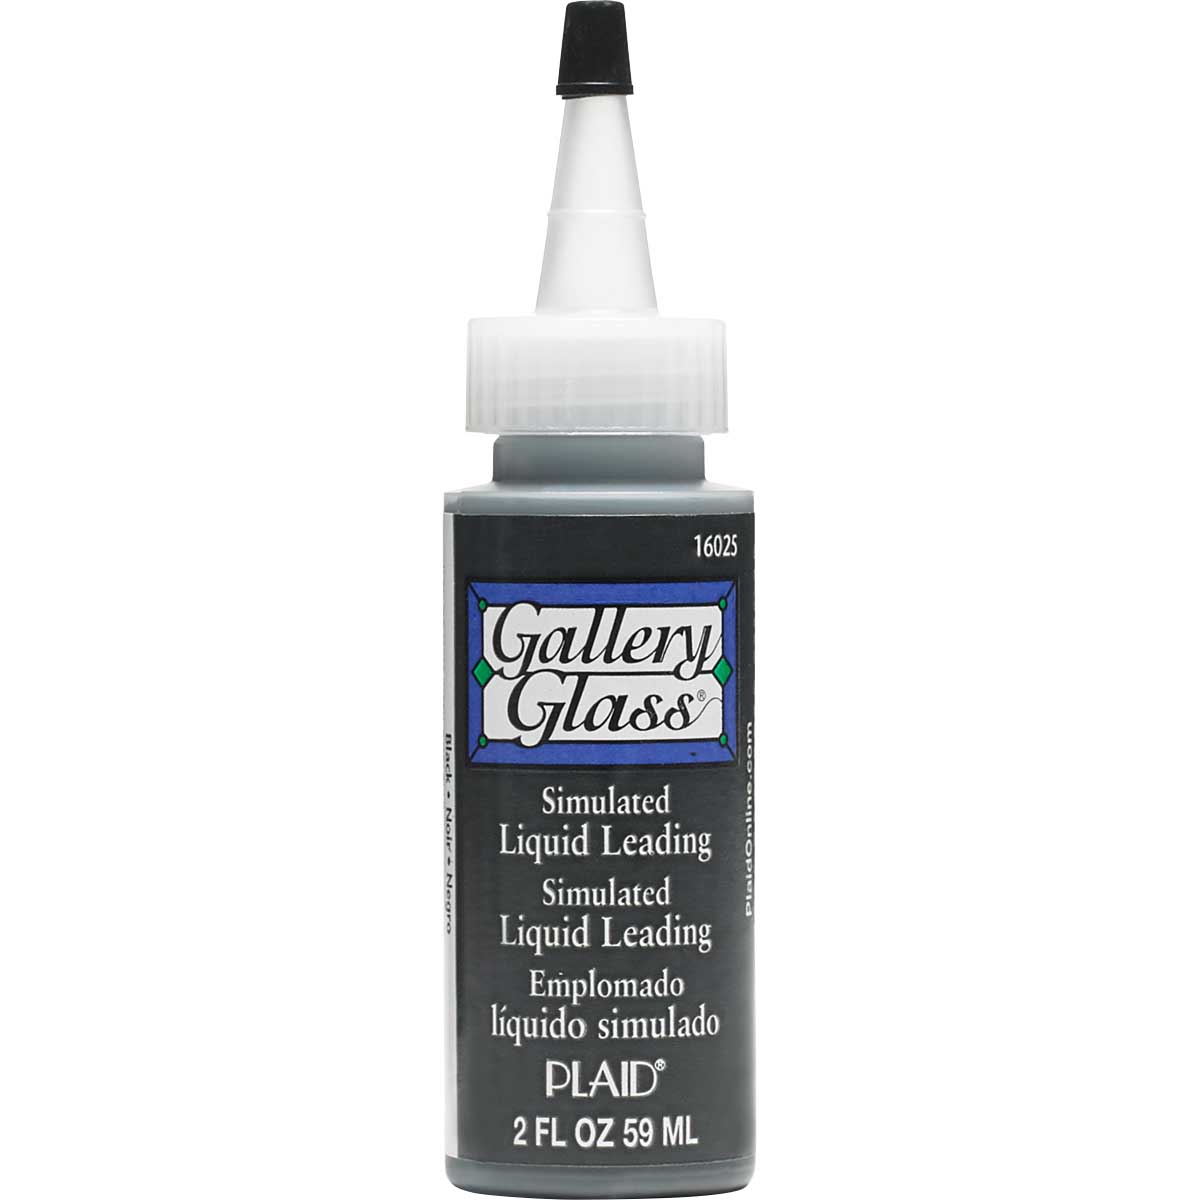 Gallery Glass ® Liquid Leading™ - Black, 2 oz. - 16025